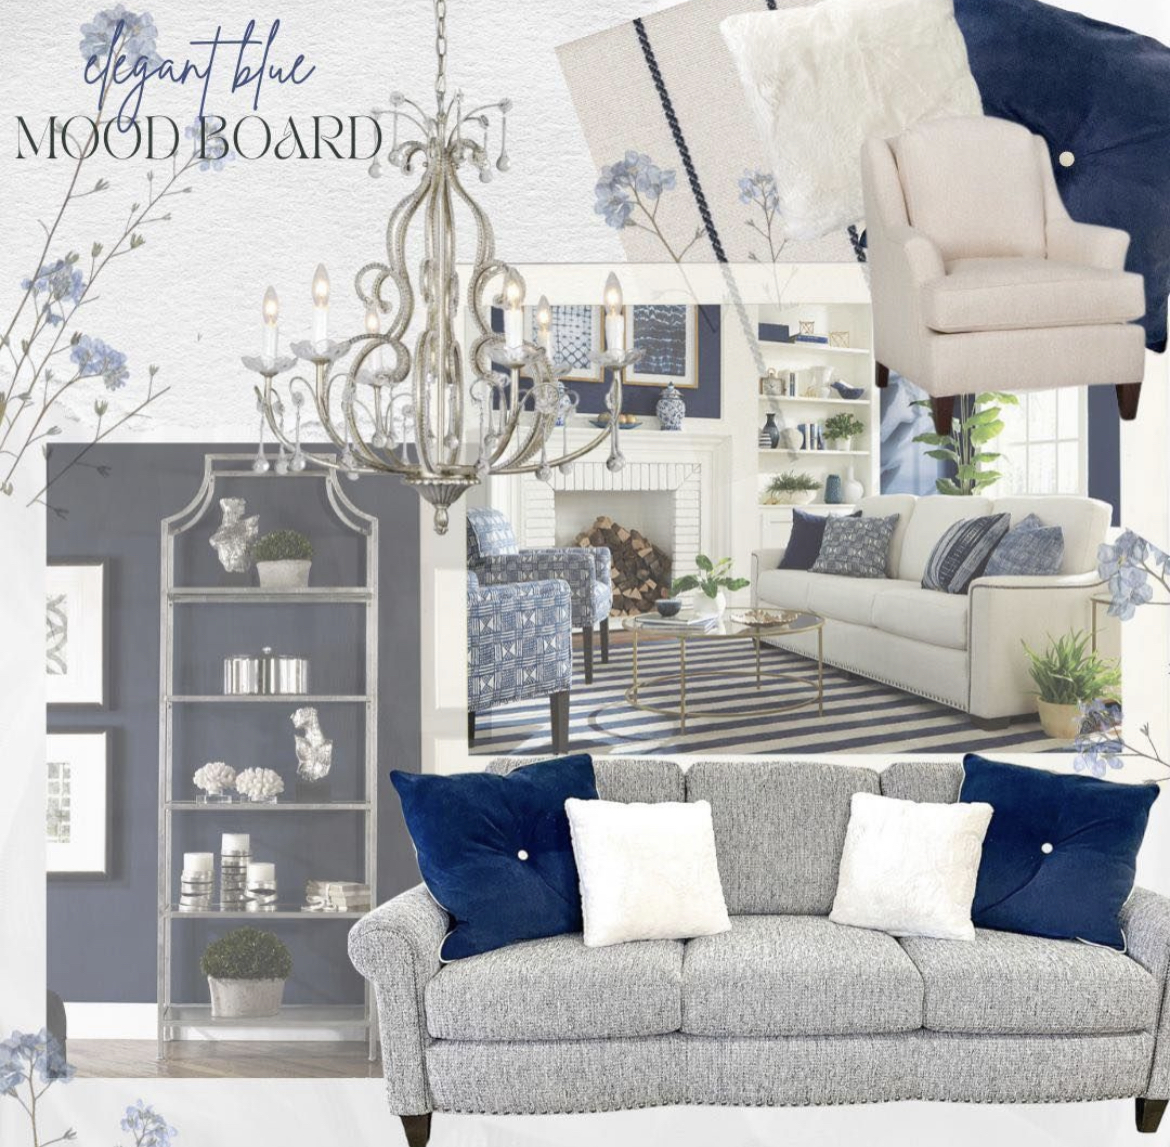 elegant blue mood board with sofa IMG_5325.jpg